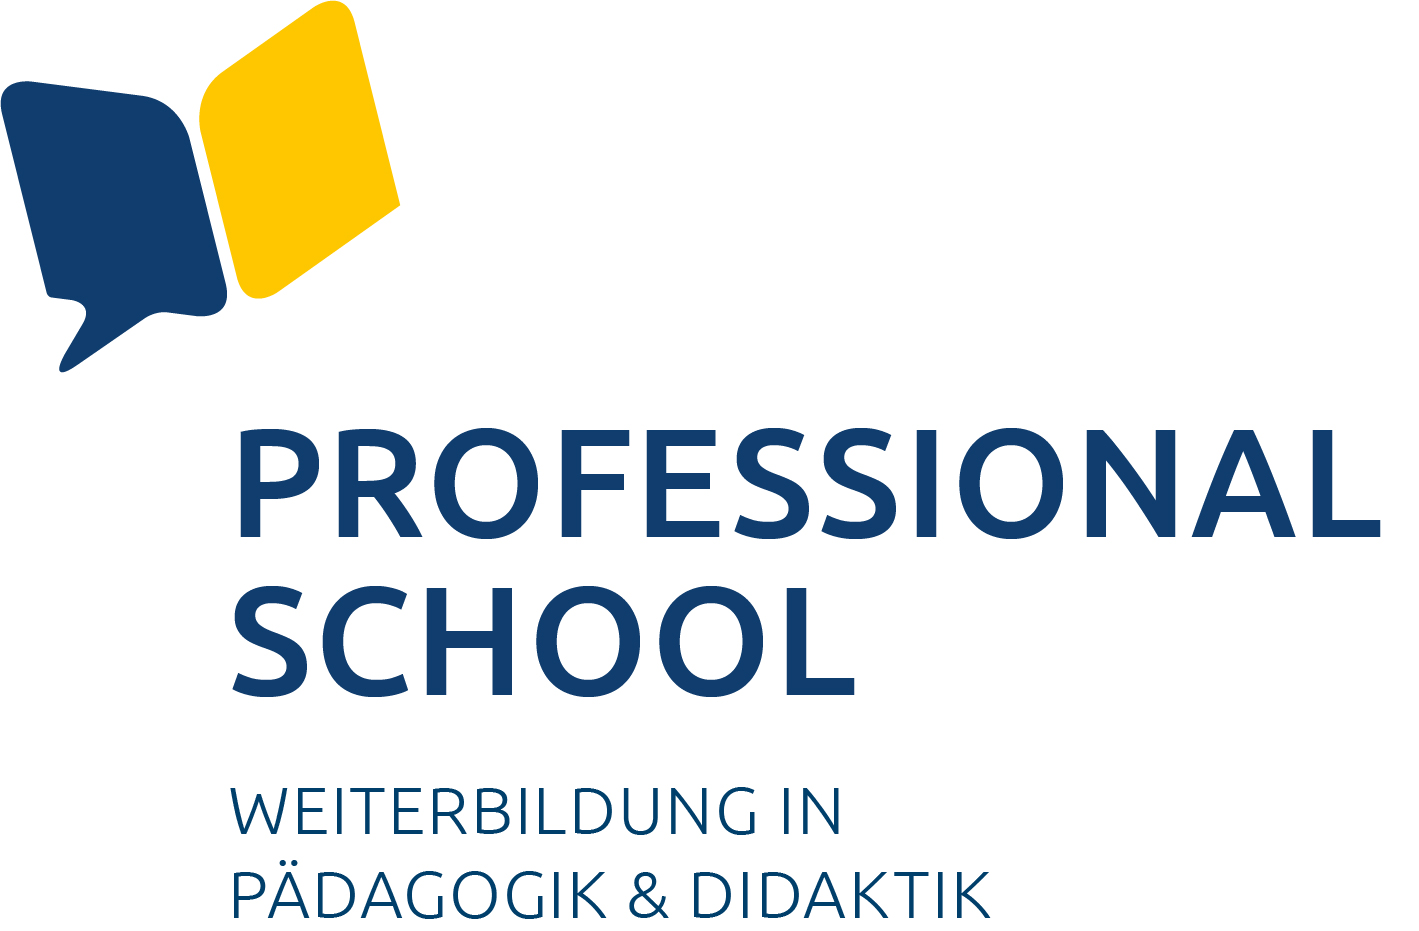 Professional School Logo